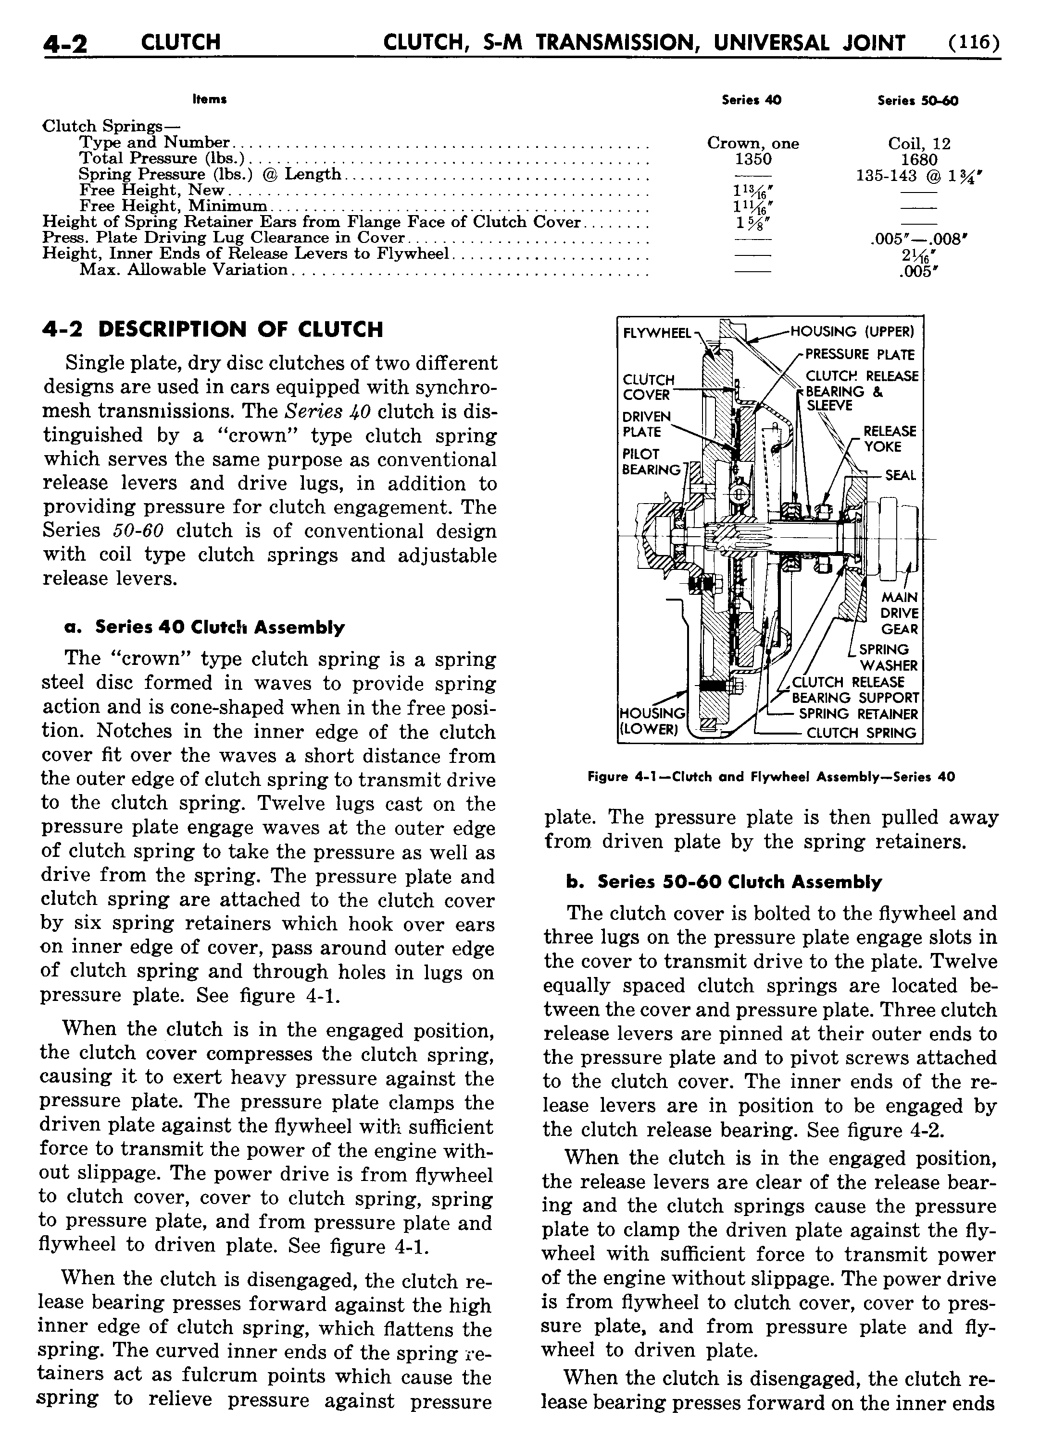 n_05 1955 Buick Shop Manual - Clutch & Trans-002-002.jpg